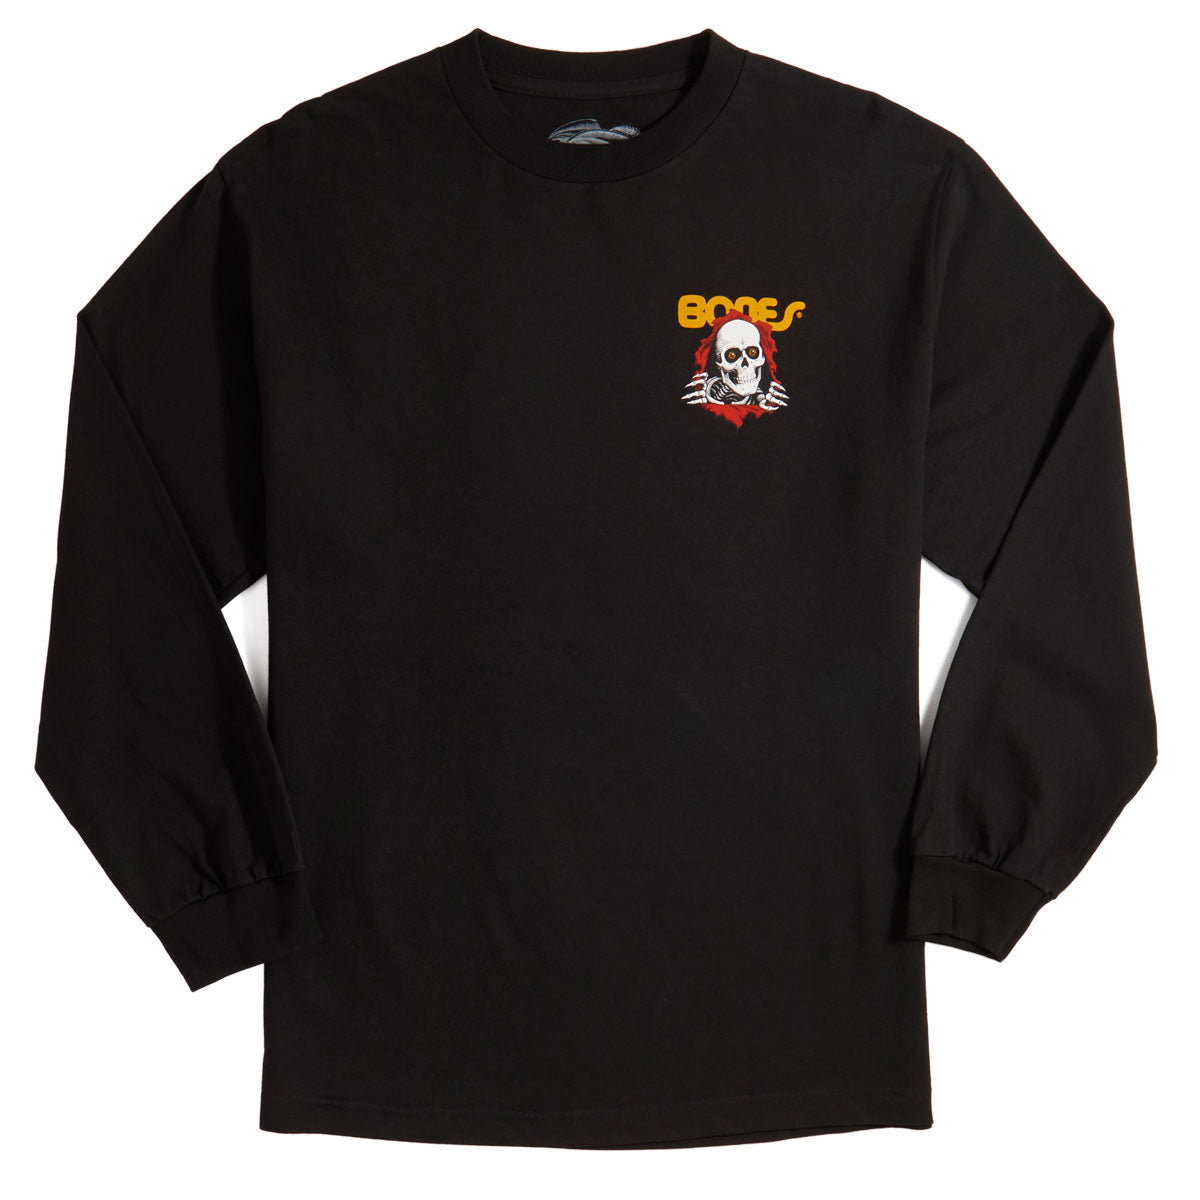 Powell-Peralta Ripper Long Sleeve T-Shirt - Black image 2